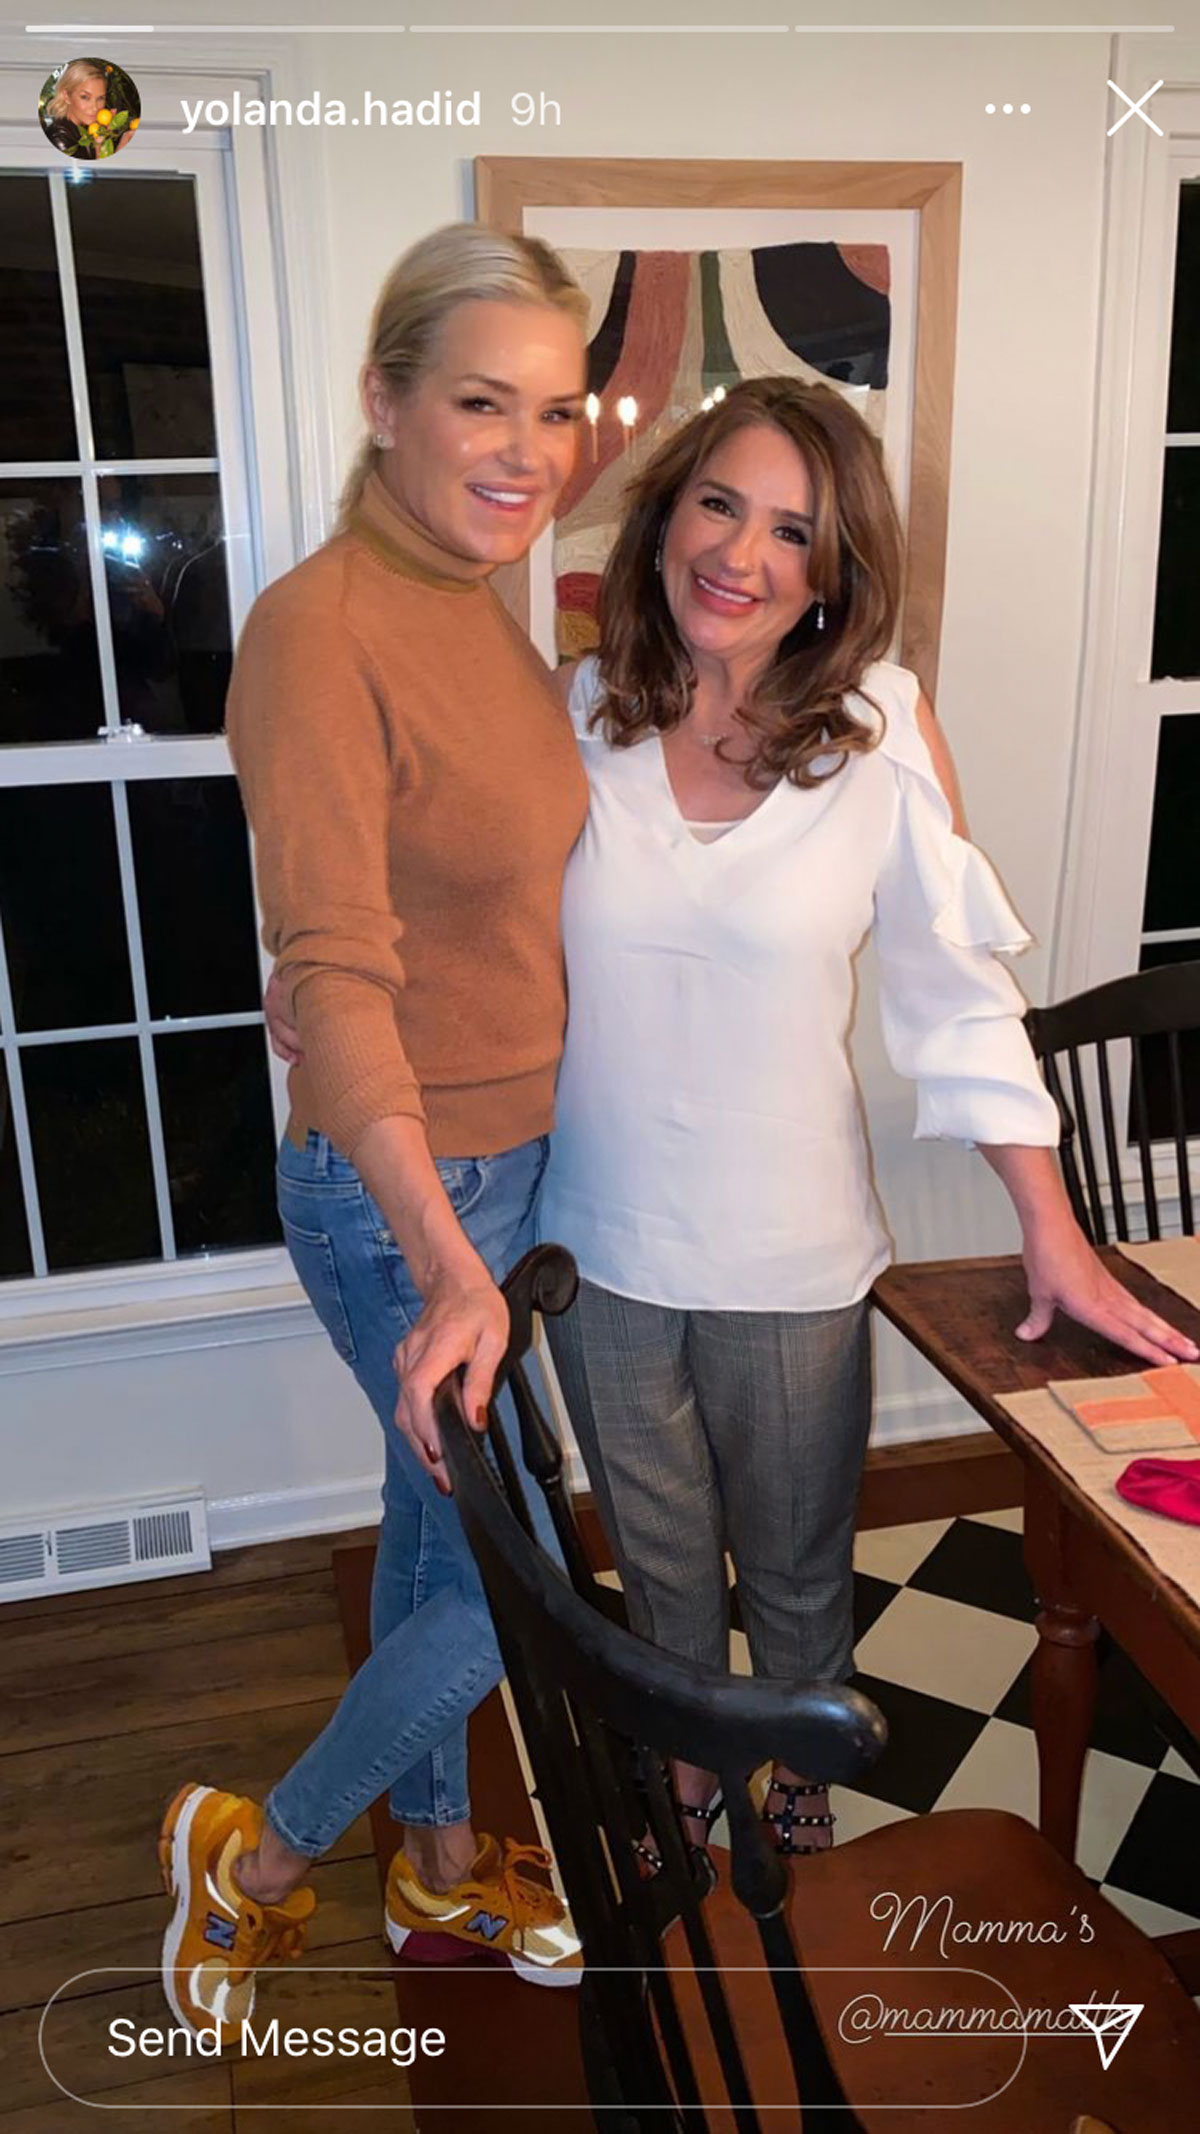 Yolanda Hadid and Tricia Malik seen enjoying their Thanksgiving time together as proud grandmas!